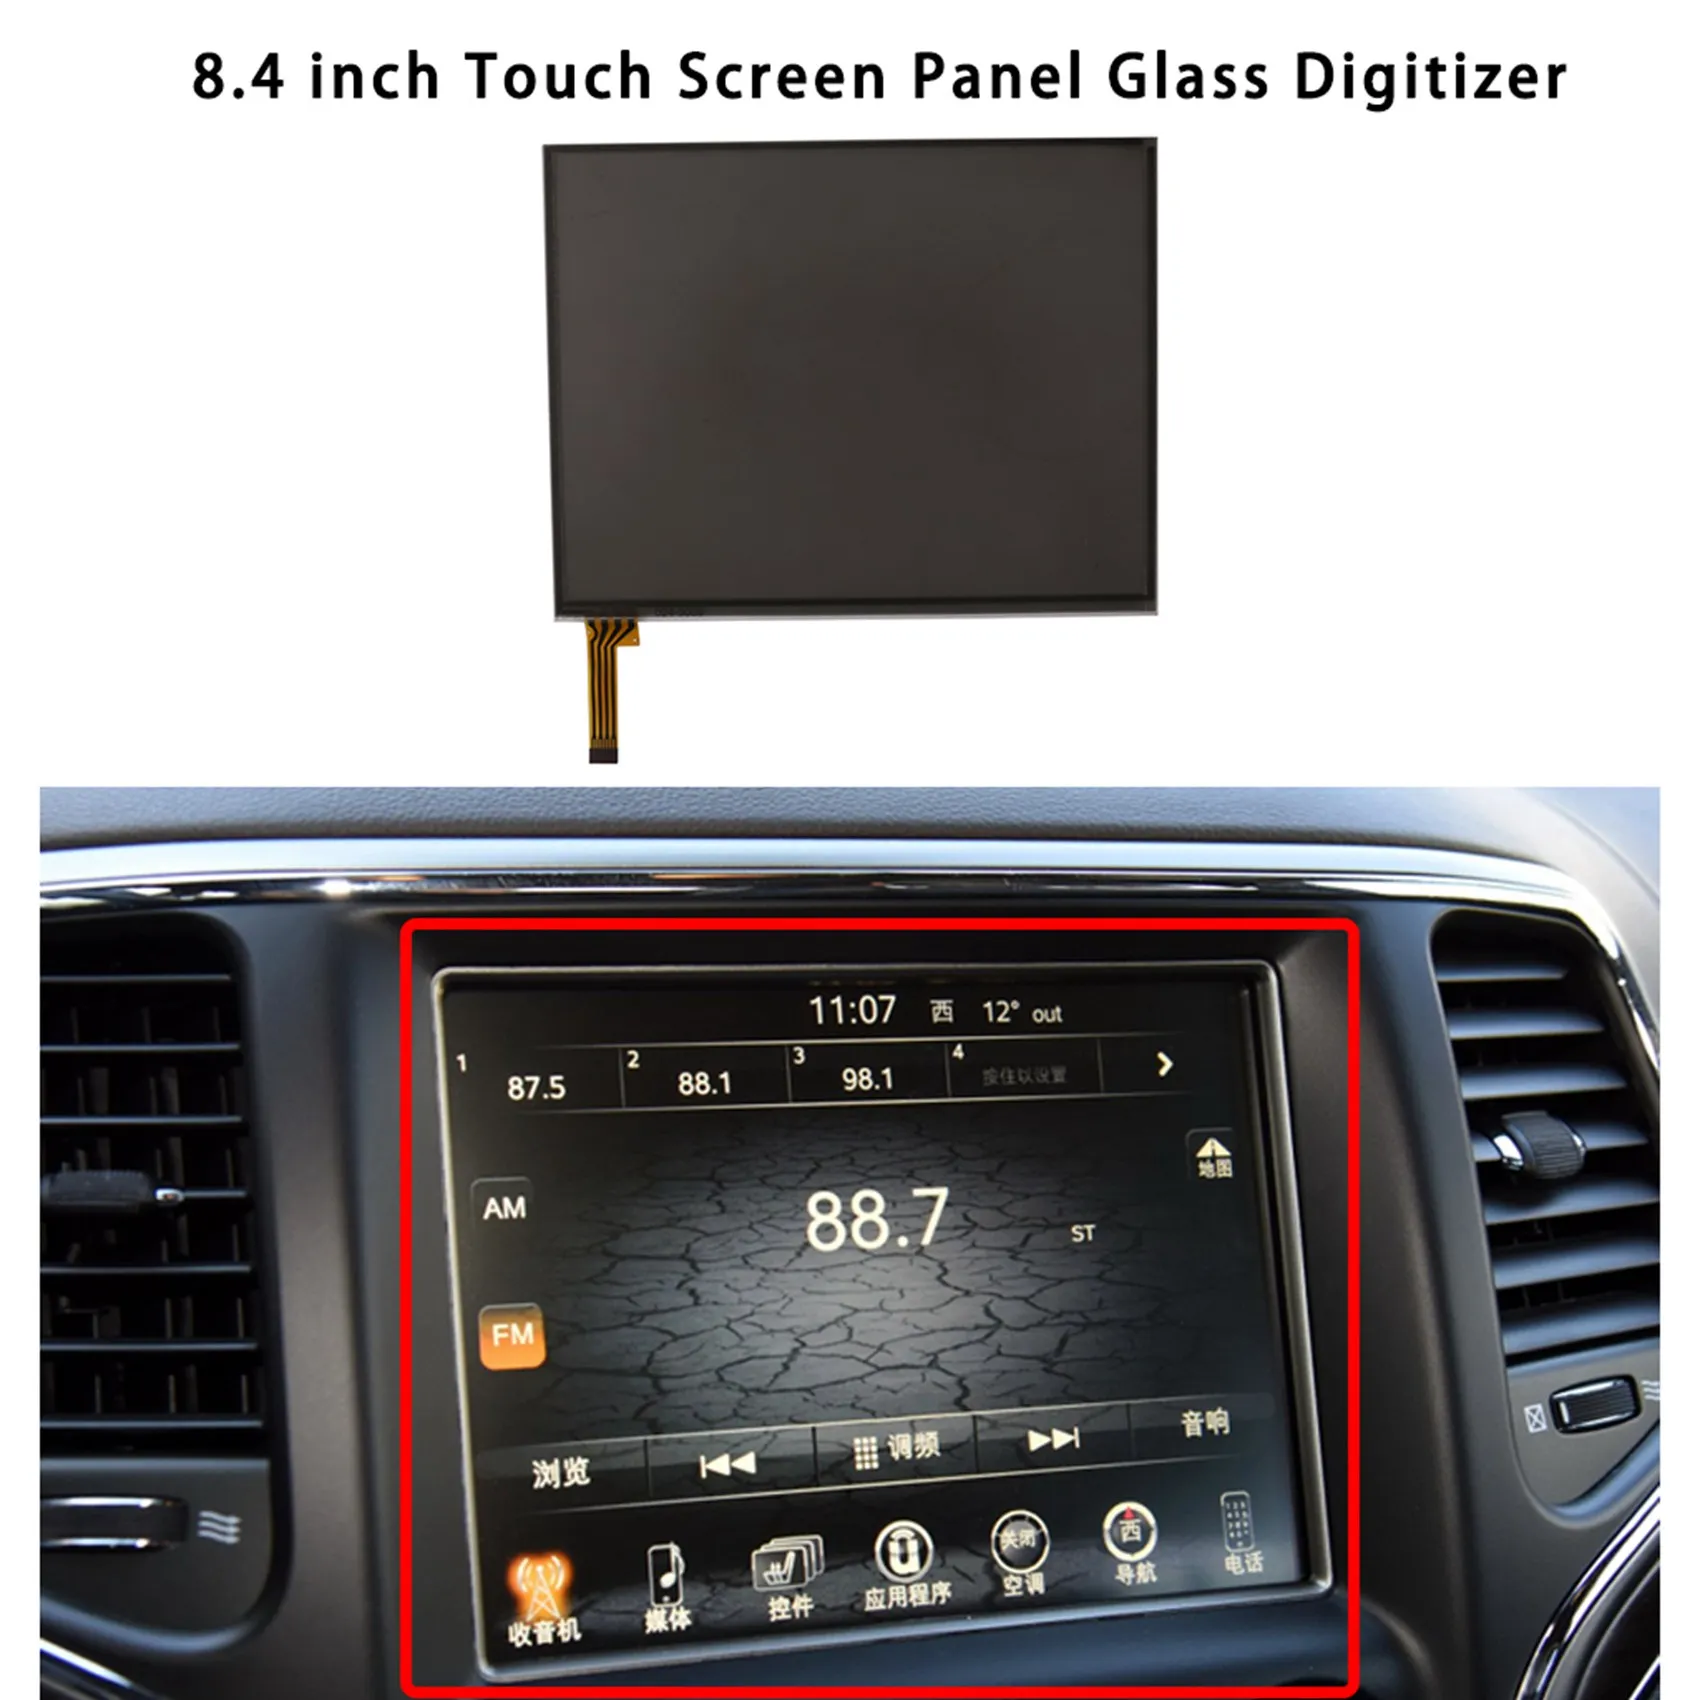 

8.4 Inch Press Screen Panel Glass Digitizer for Jeep Dodge Grand Cherokee Dodge RAM 1500 Uconnect 3C 8.4 VP3 VP4